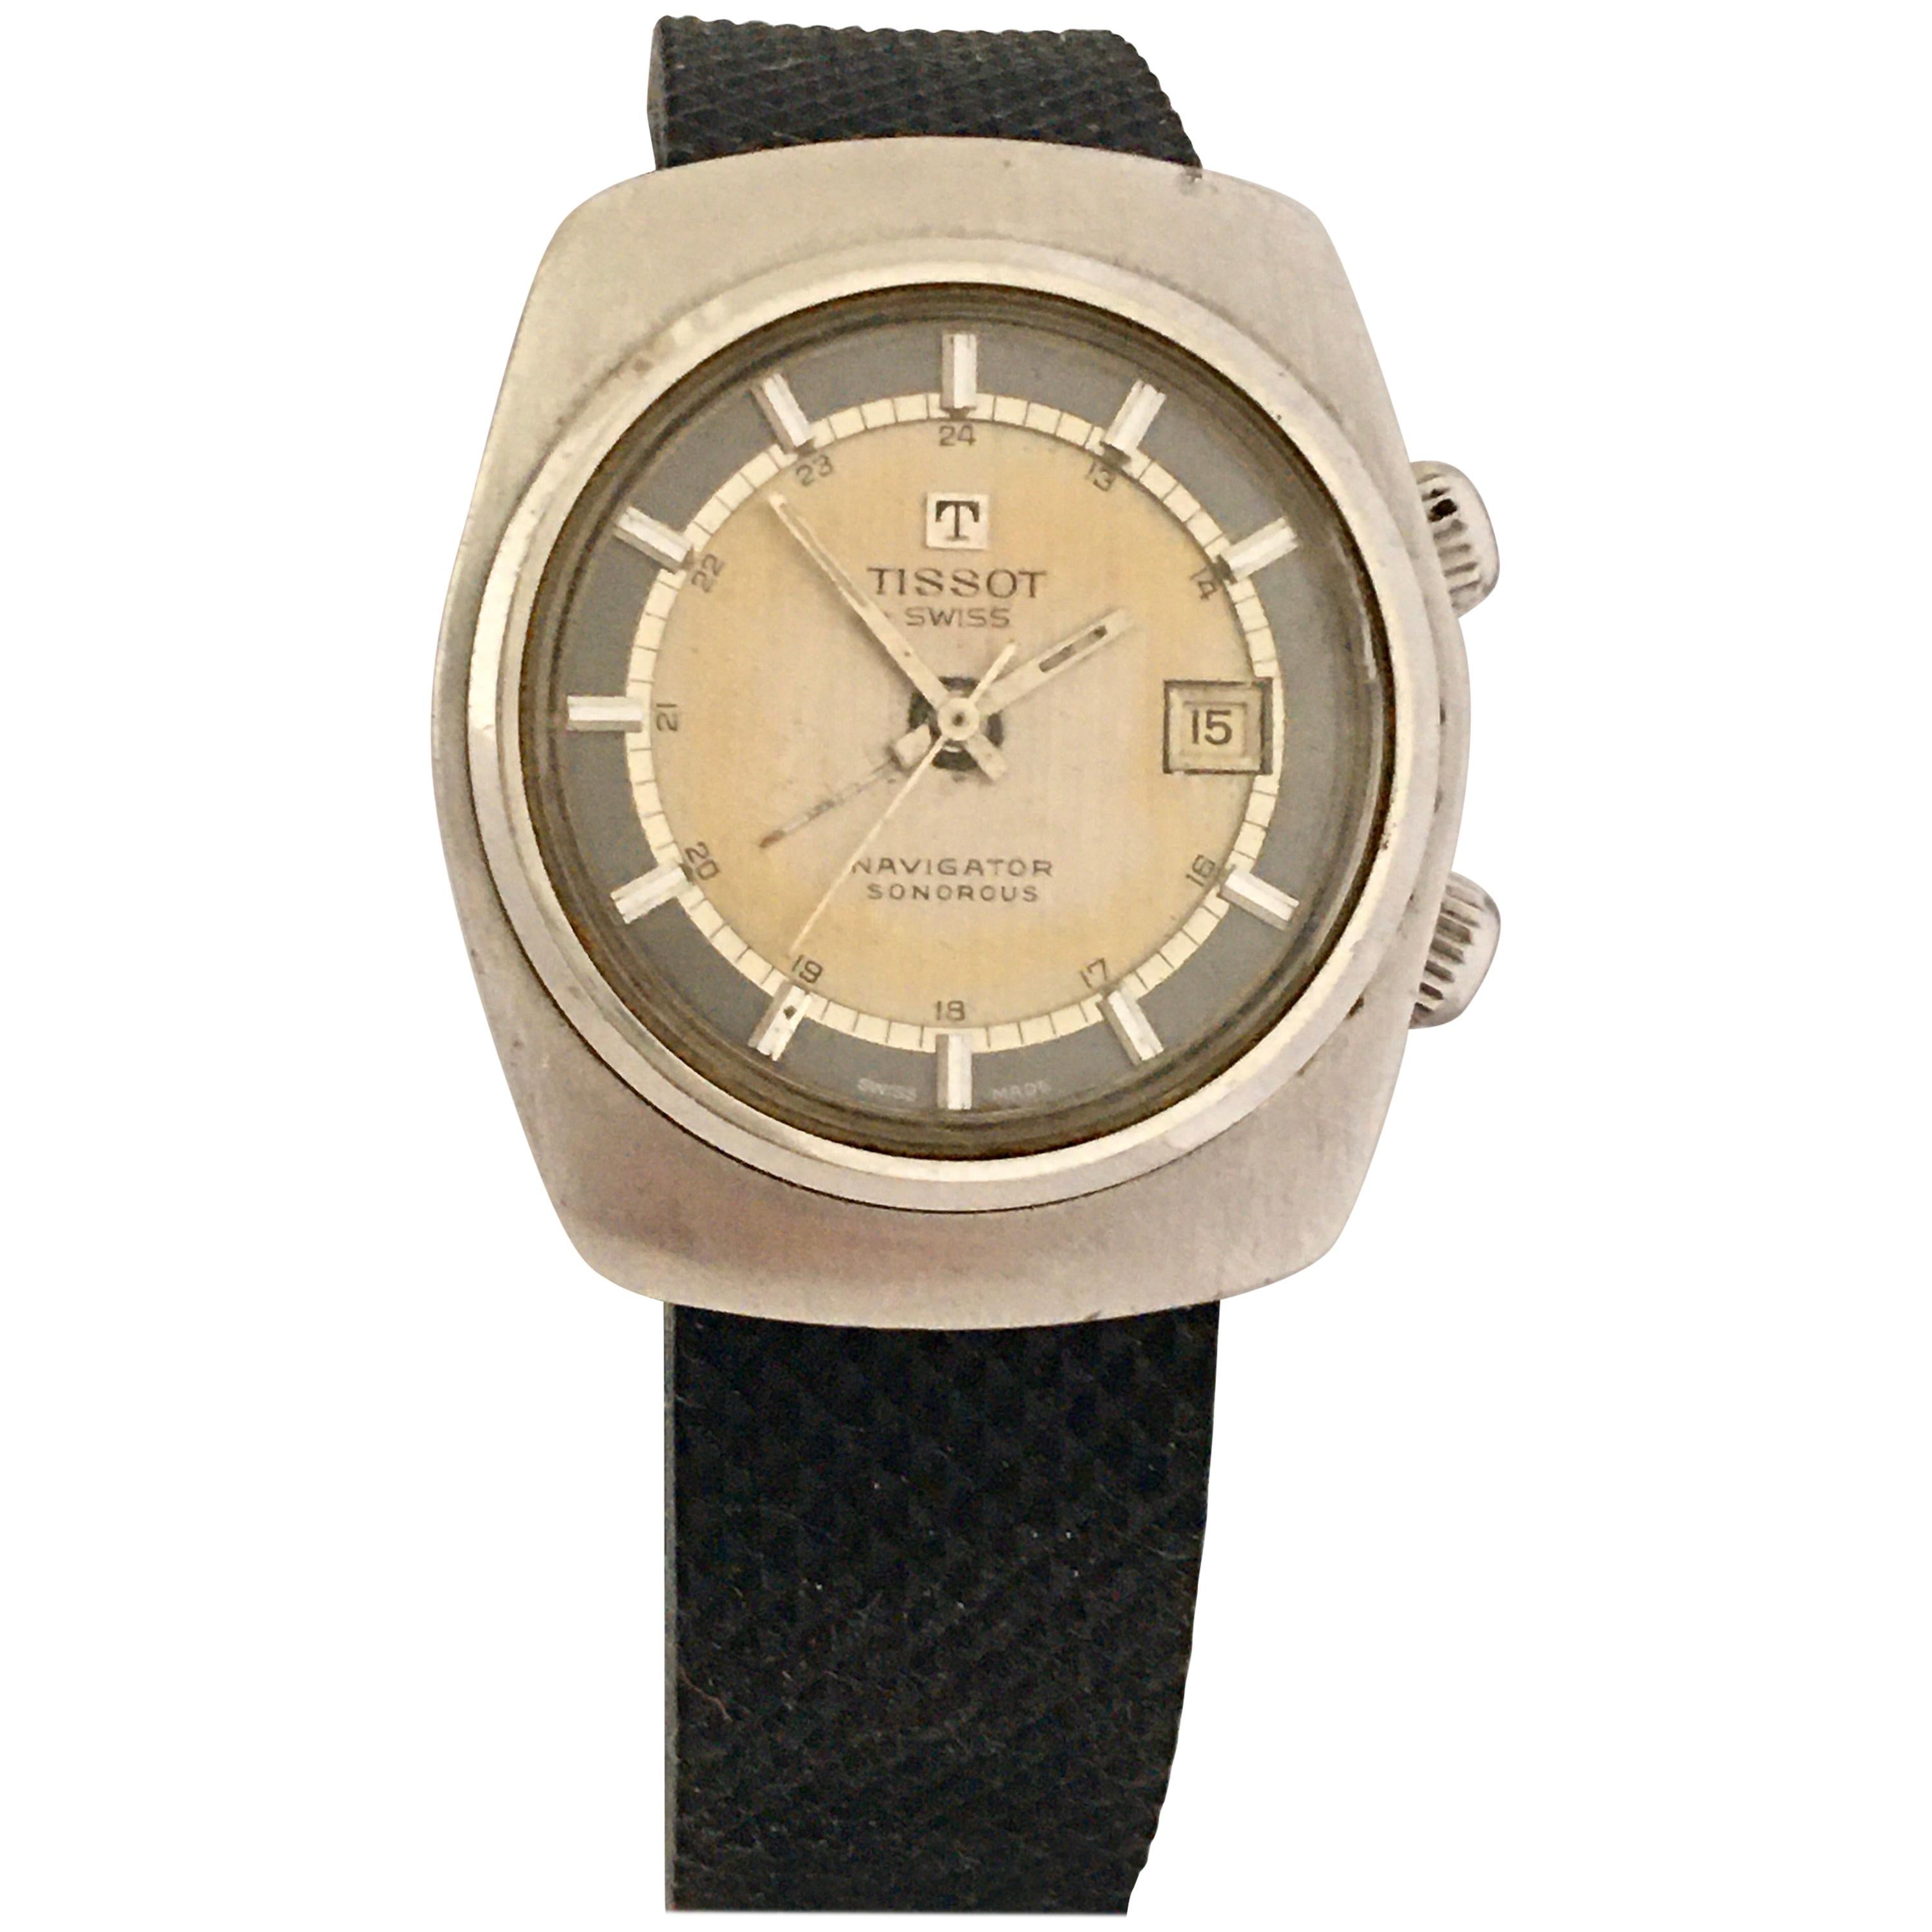 Vintage 1970s Stainless Steel Tissot Swiss Navigator Sonorous Alarm Watch